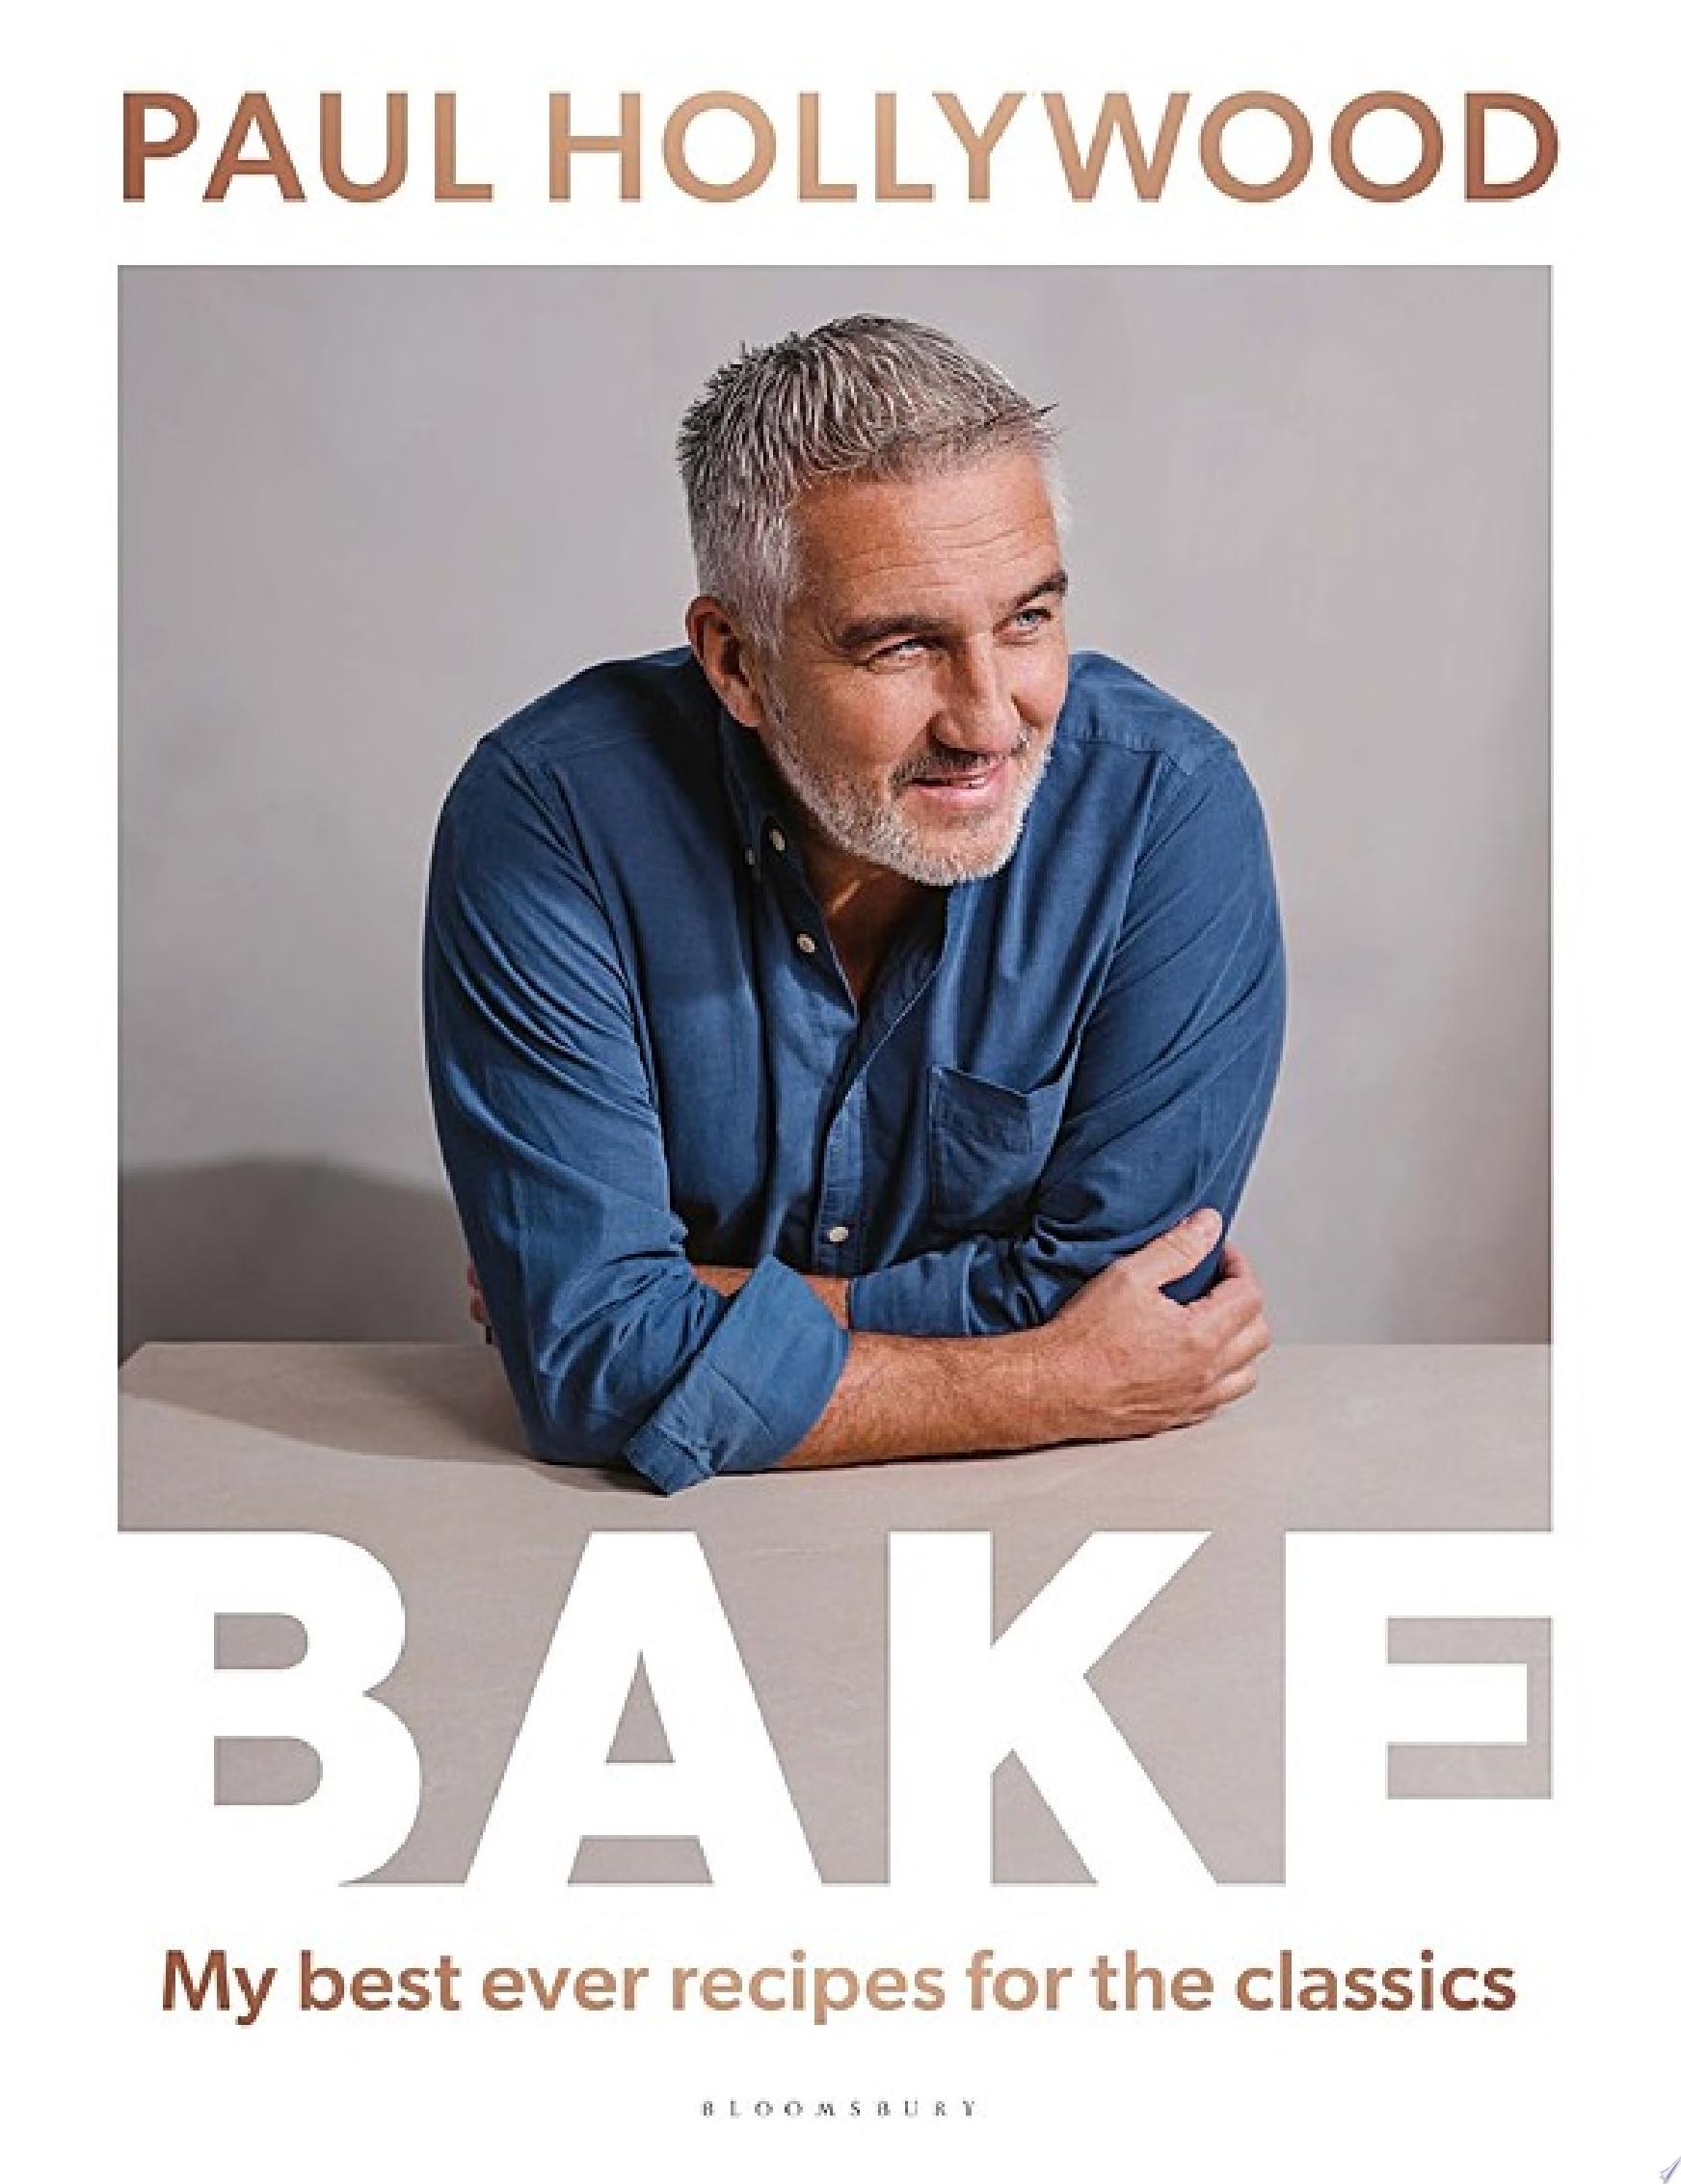 Image for "BAKE"